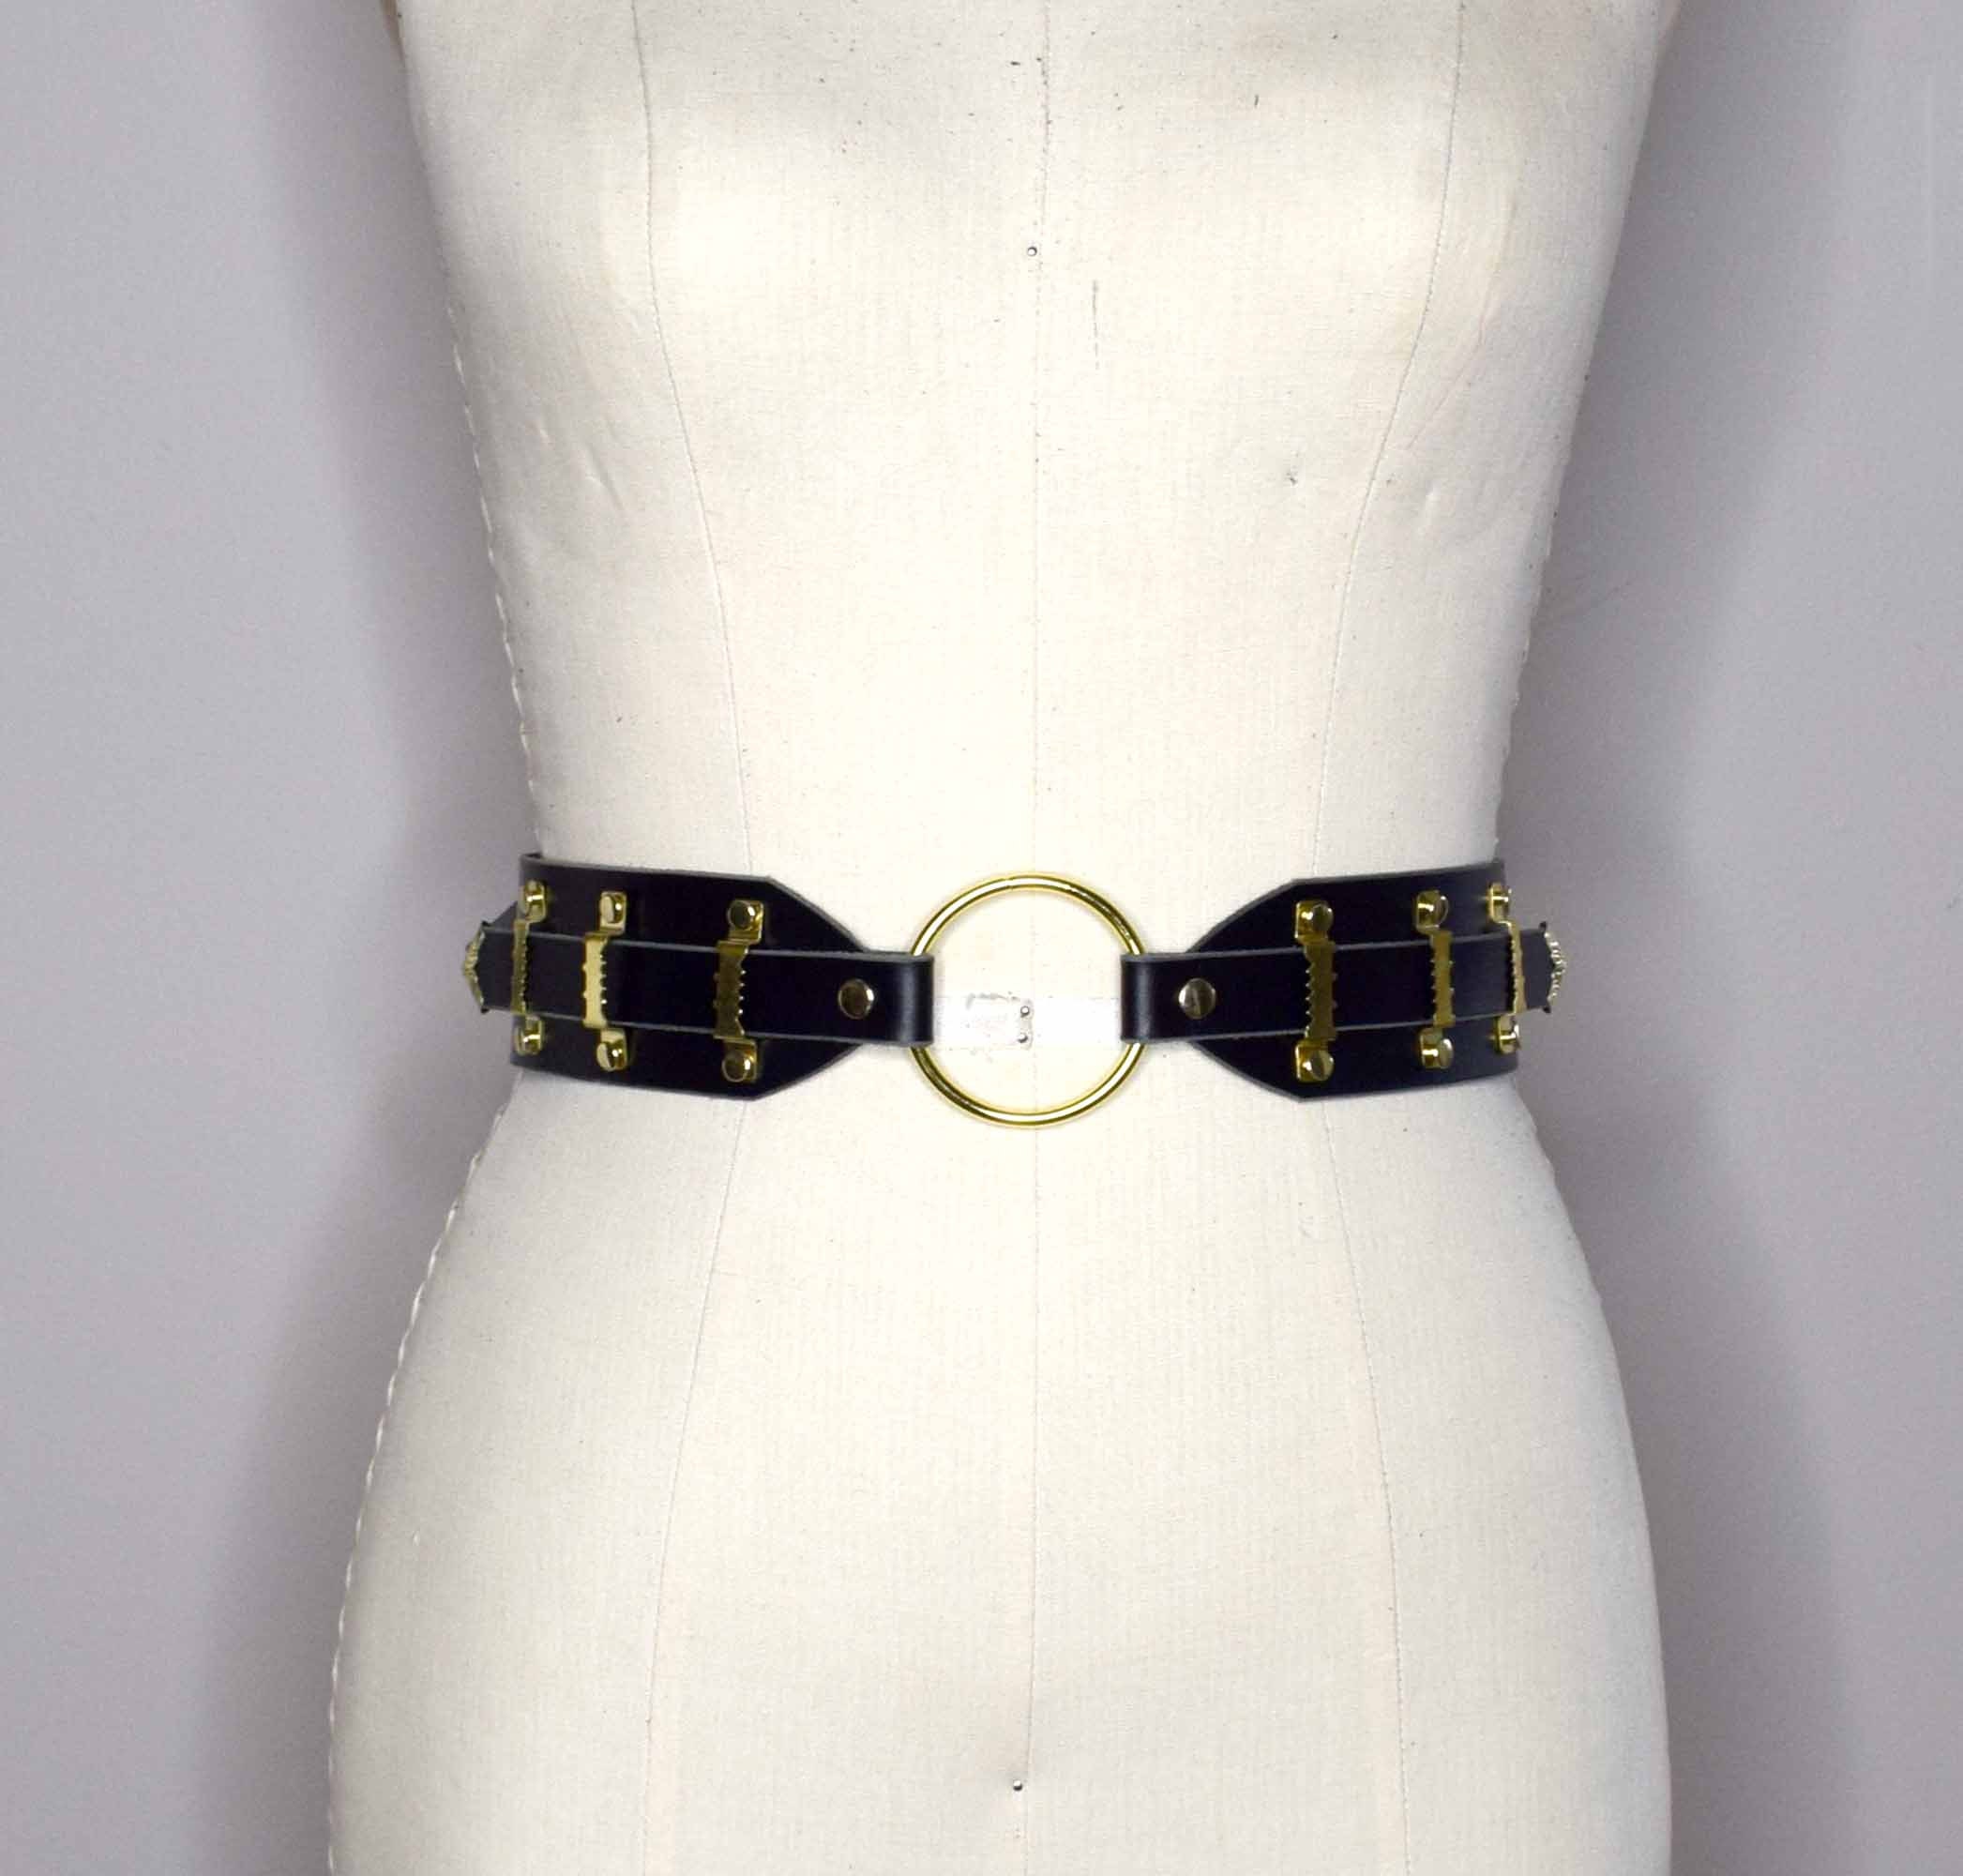 Men's Black Textured Leather Belt with Silver Buckle - Barneys Originals